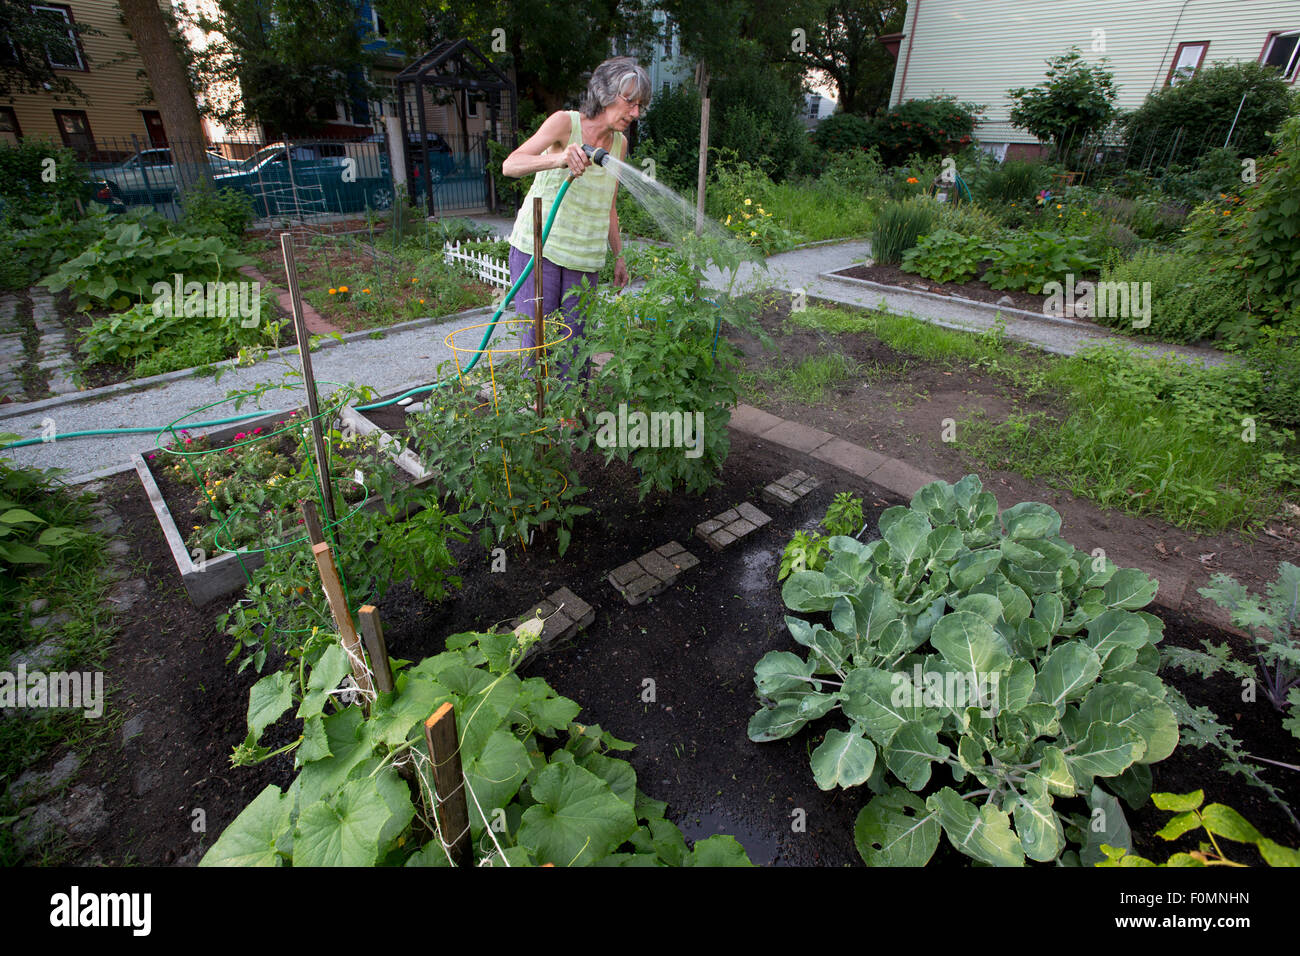 Woman watering urban garden plot Stock Photo